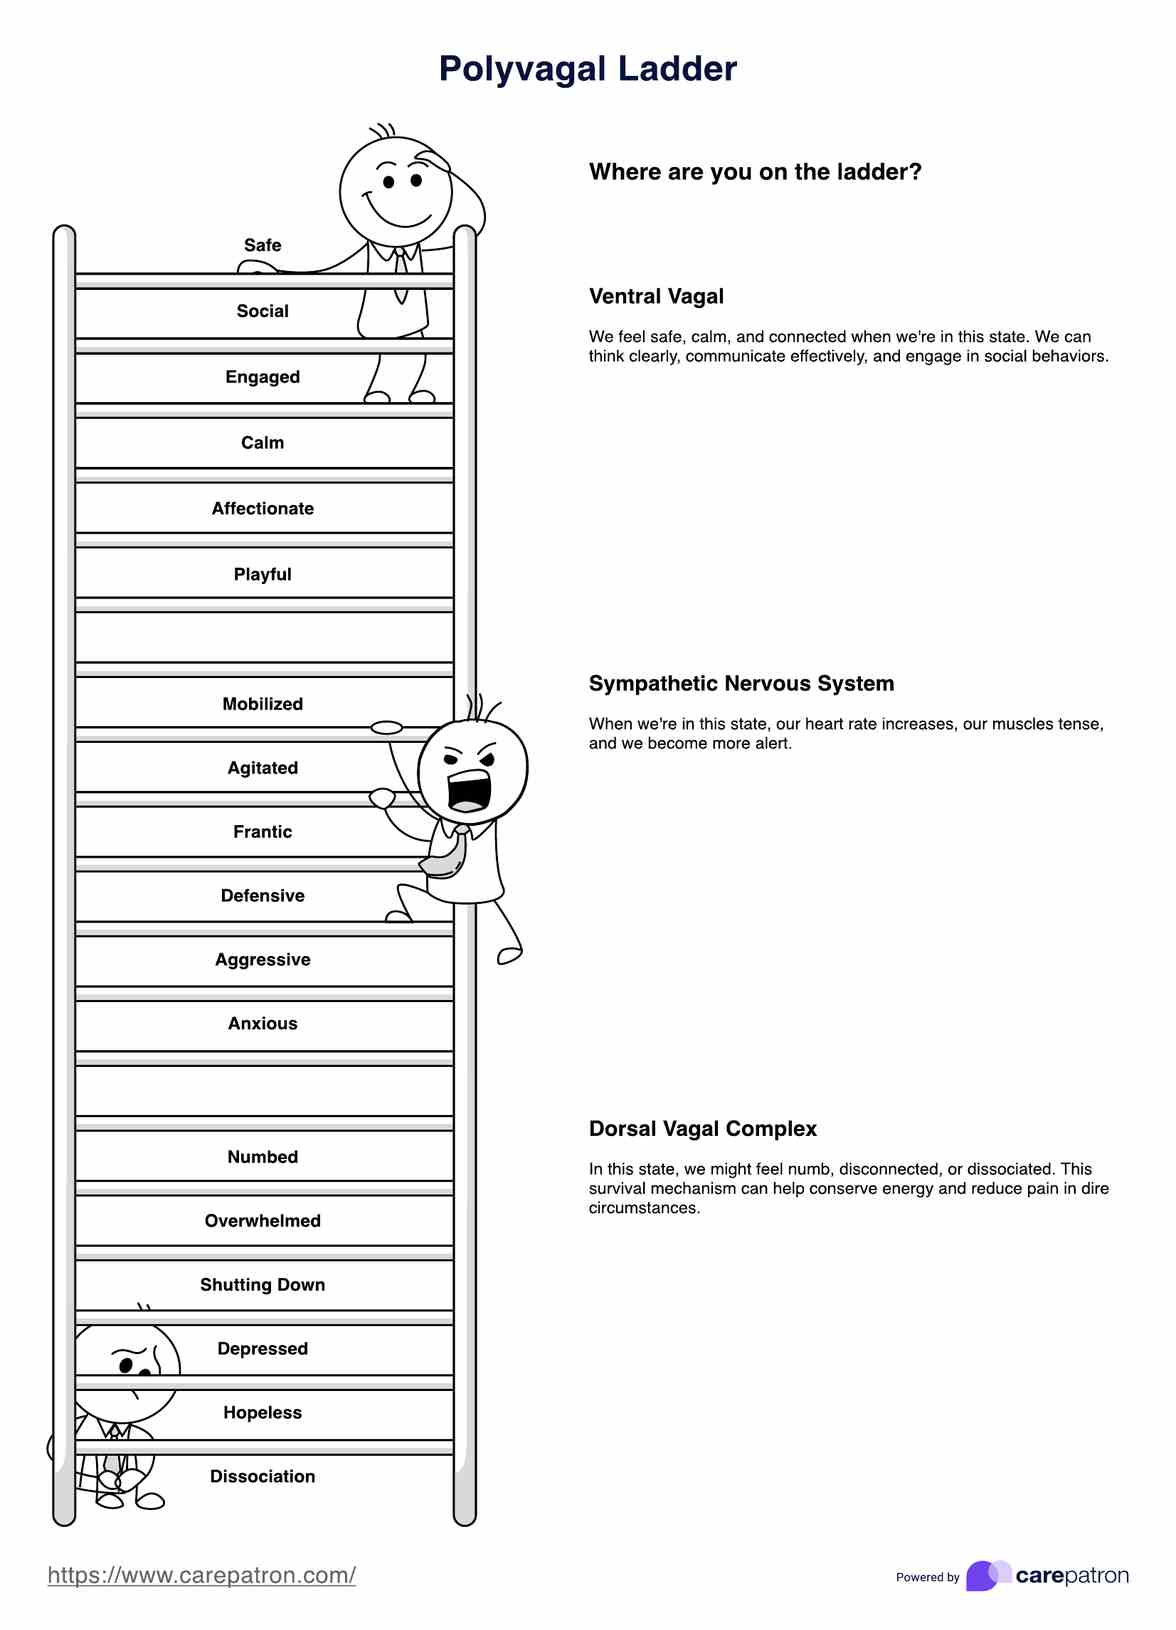 Polyvagal Ladder PDF Example